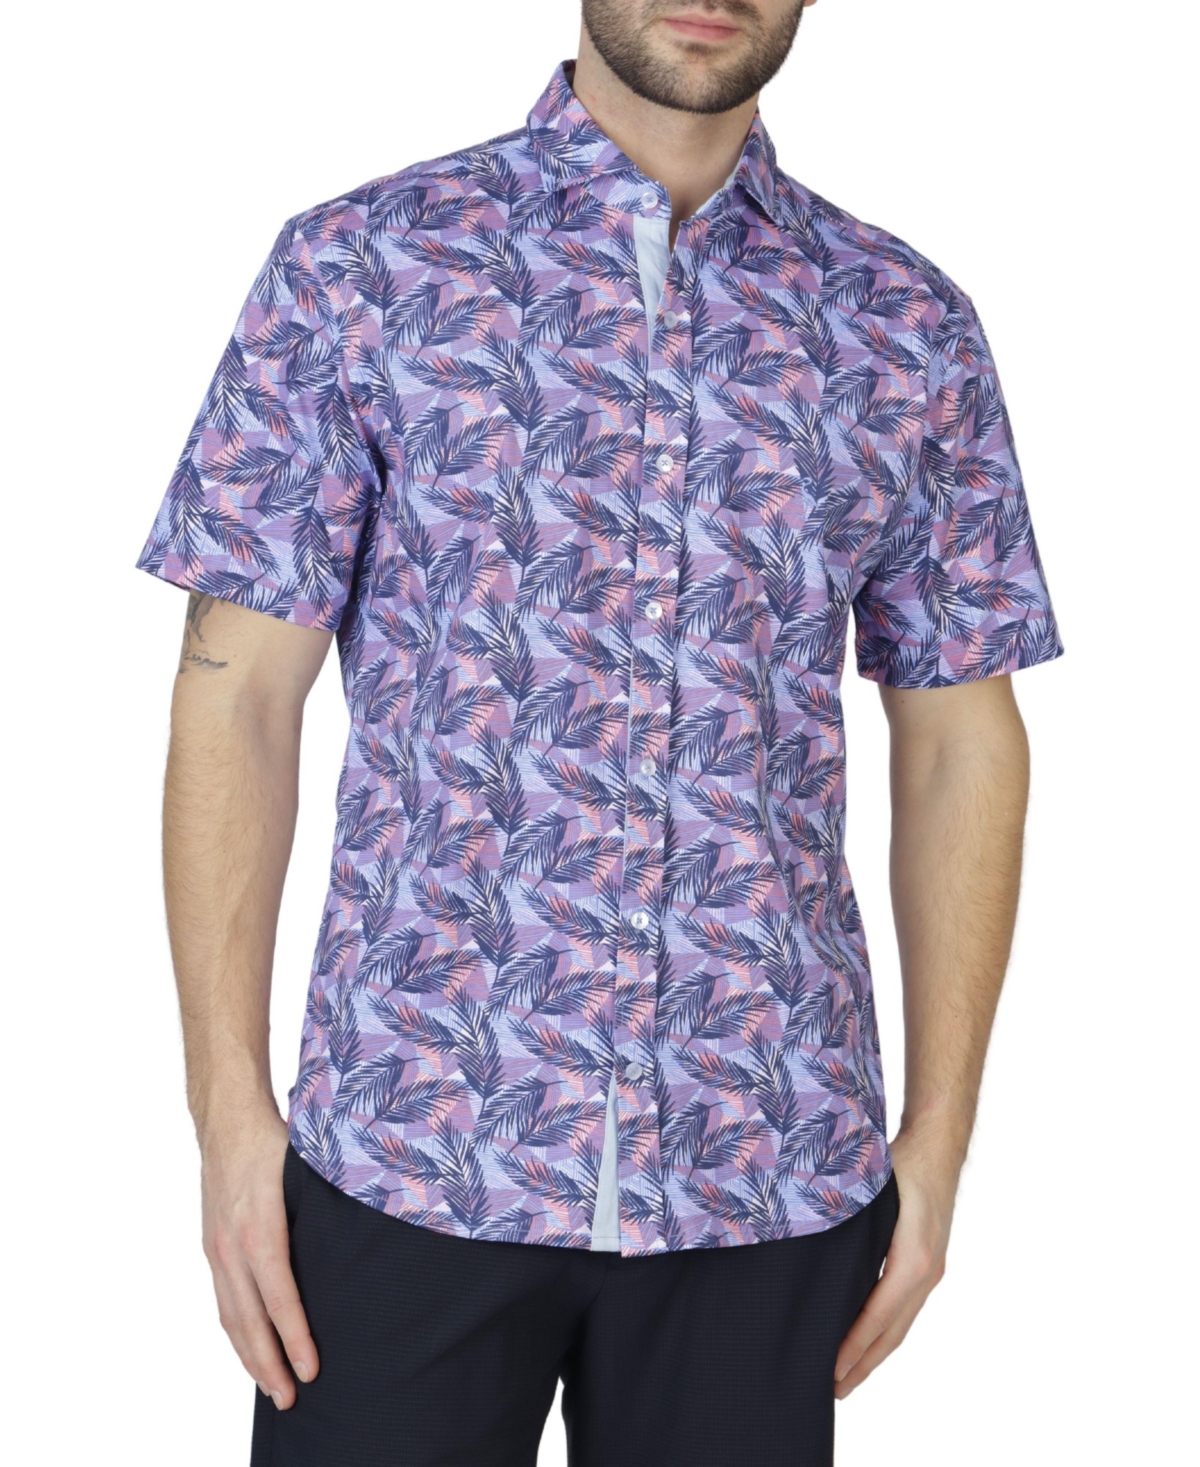 Men's Tropical Leaves Knit Short Sleeve Shirt - Navy